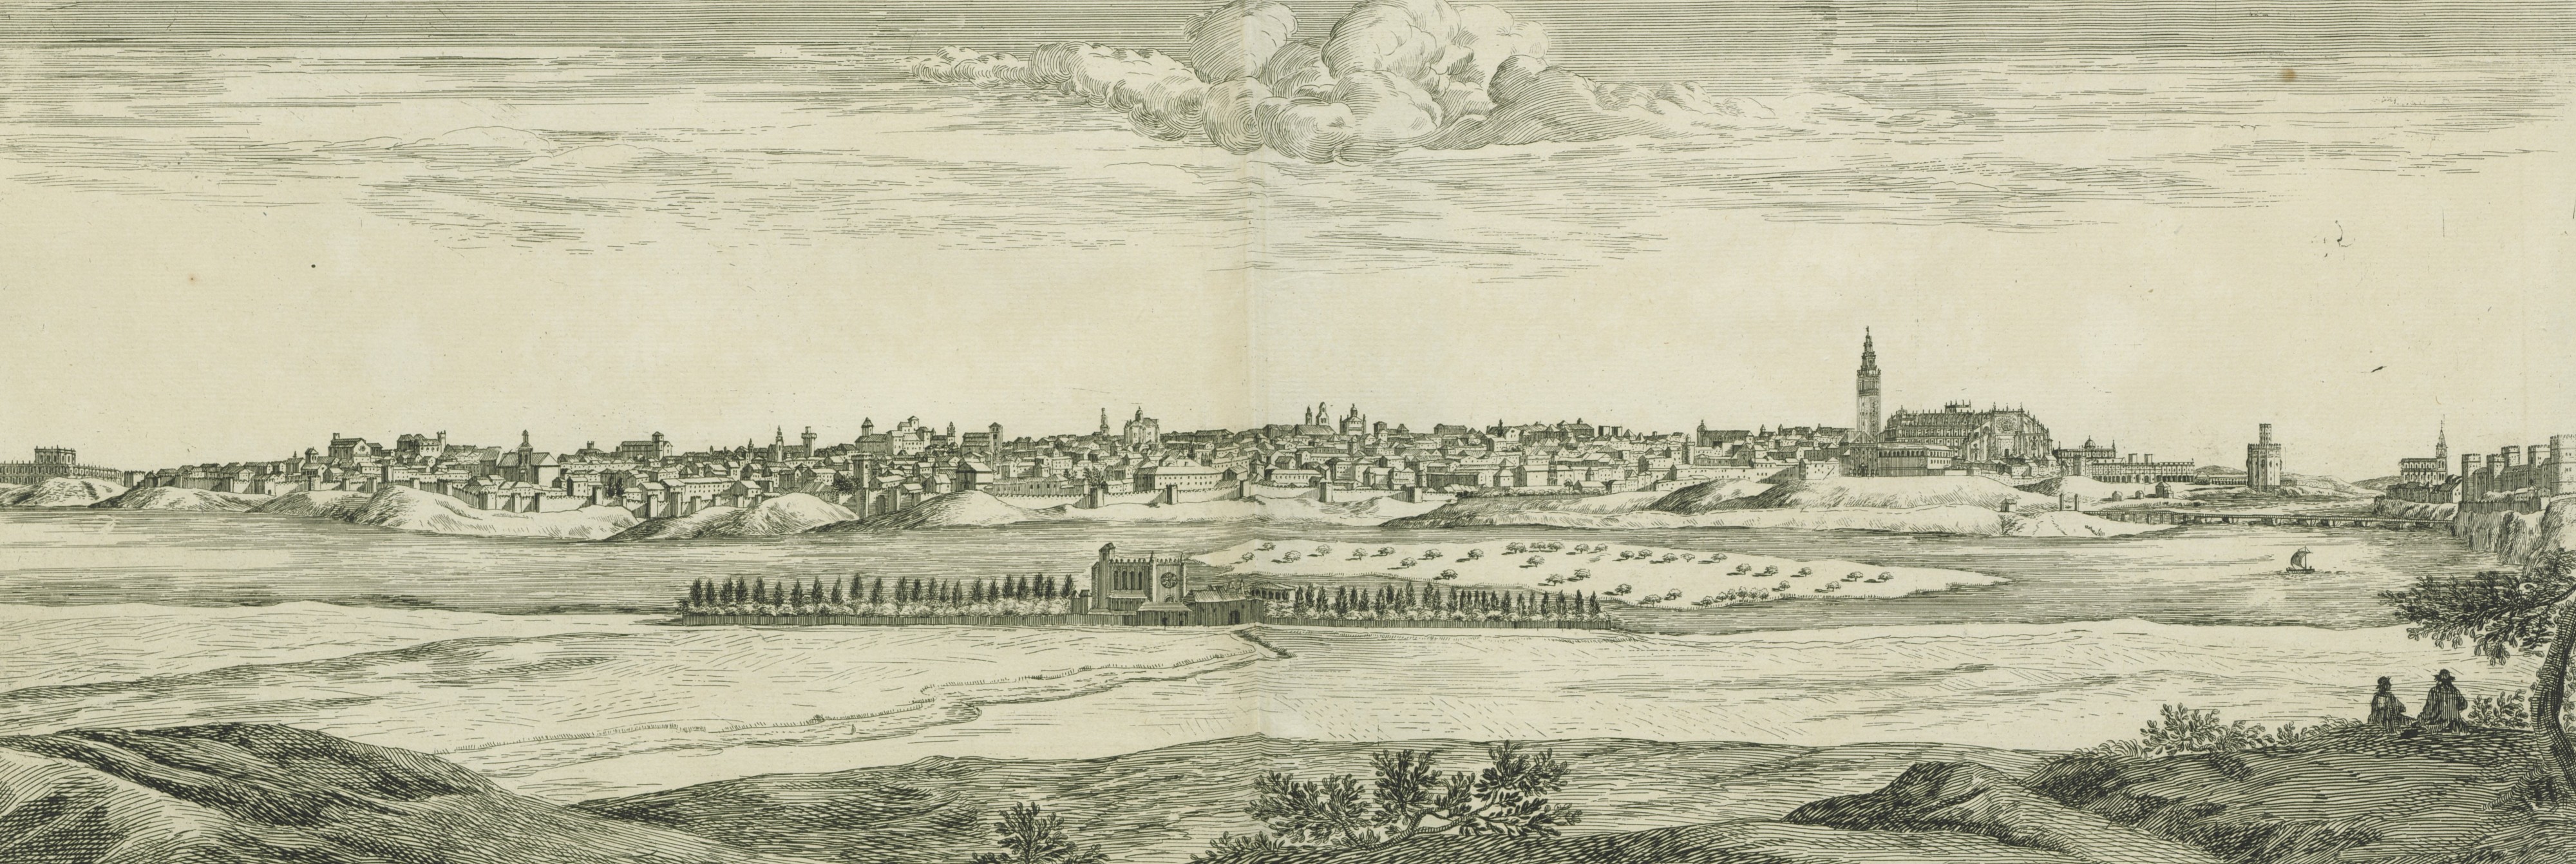 Seville 1650